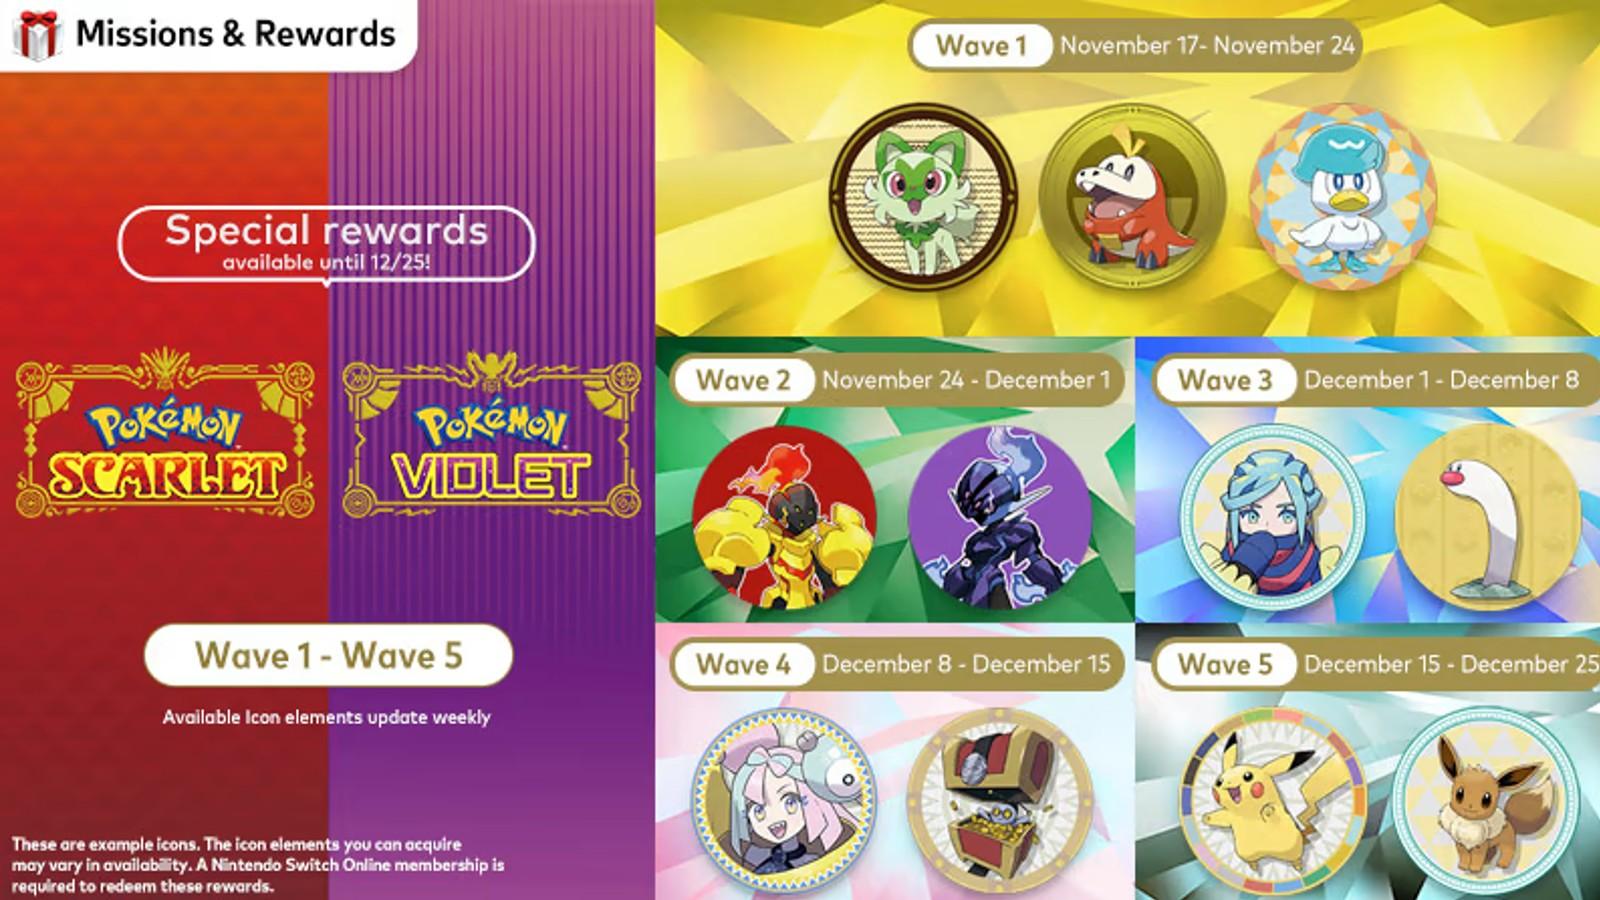 Pokémon Scarlet e Pokémon Violet (Nintendo Switch) – Já disponíveis! 